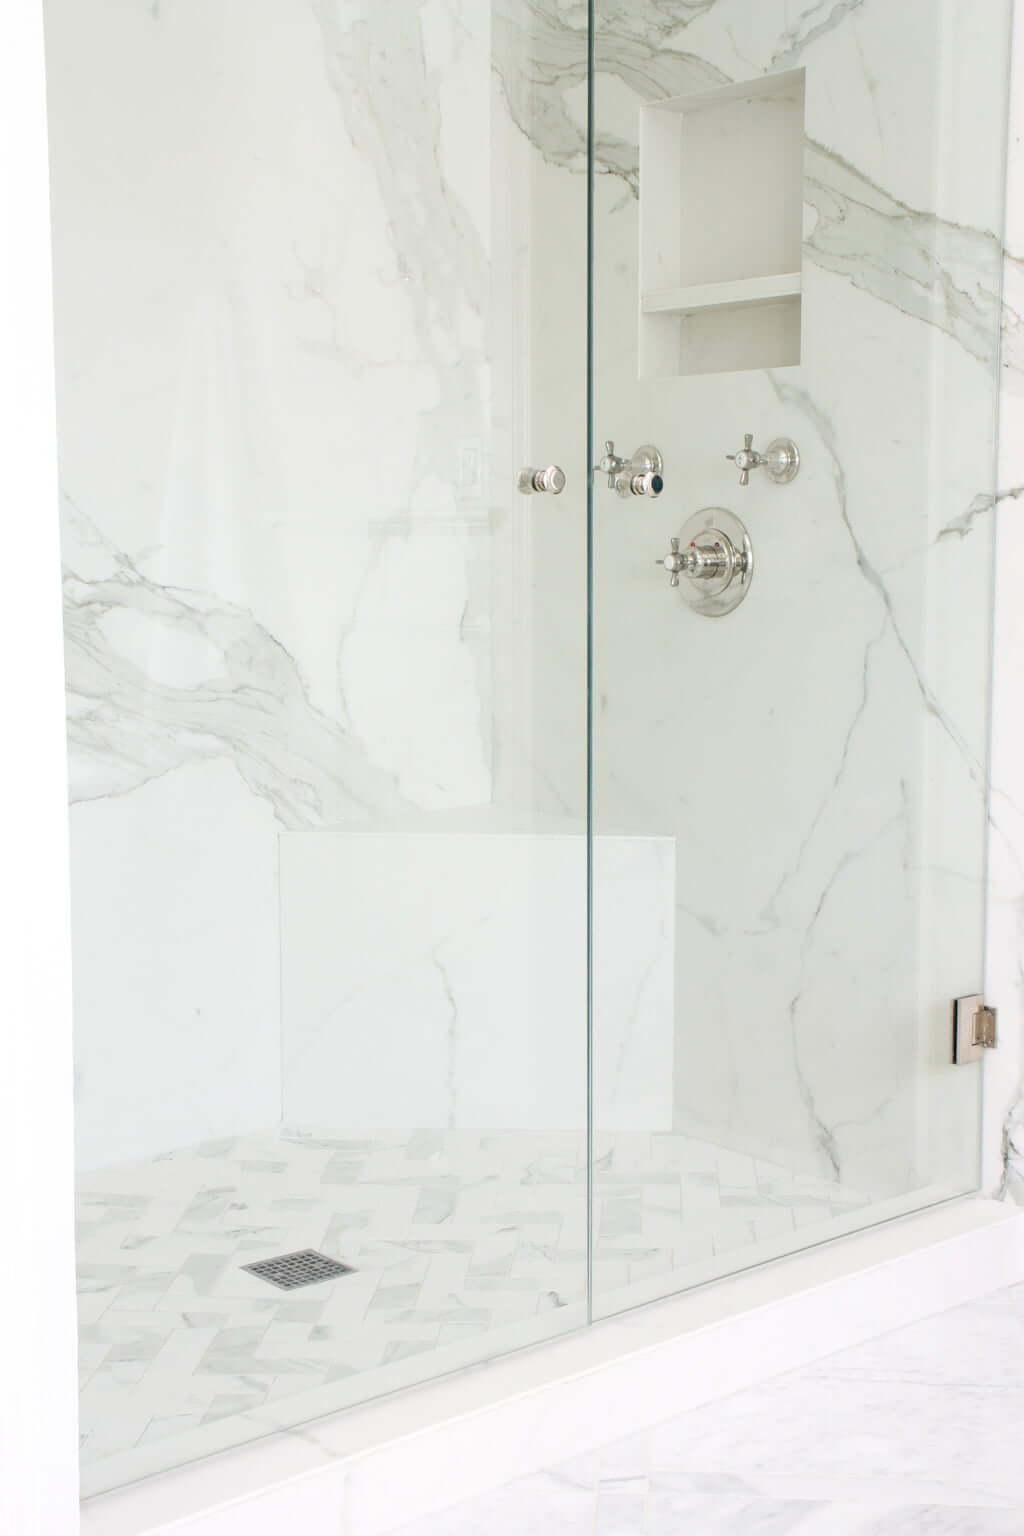 glass doors to double porcelain shower, porcelain shower shelf with hardware below